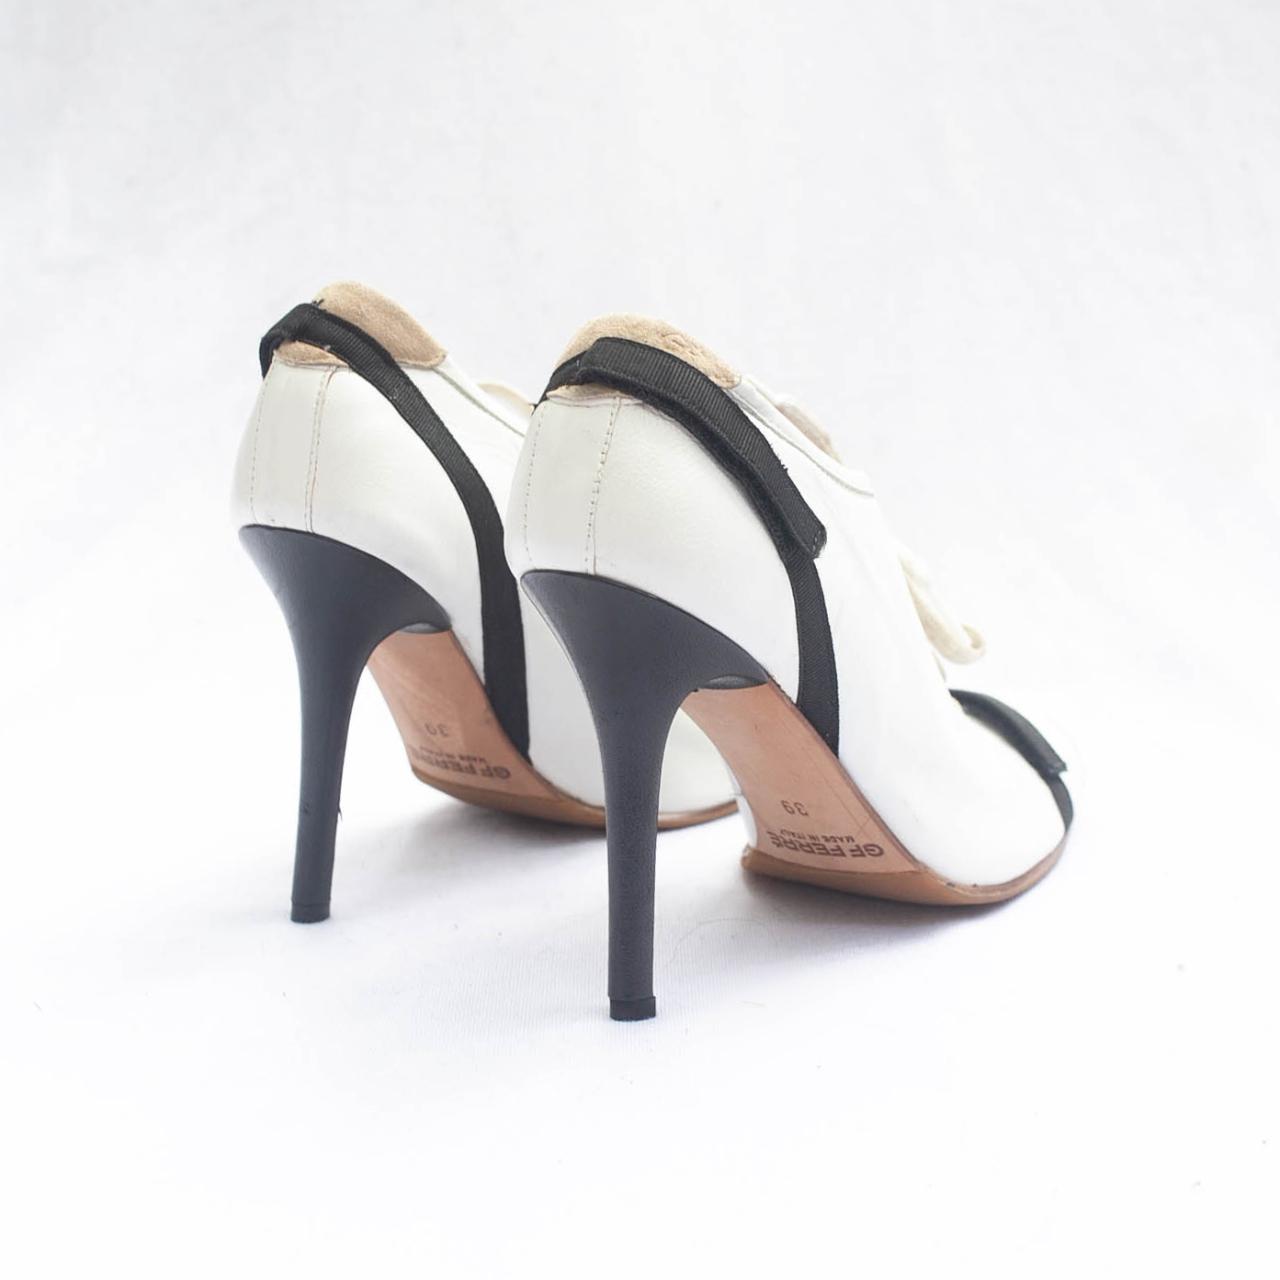 Gianfranco Ferre leather heels. These are floor - Depop